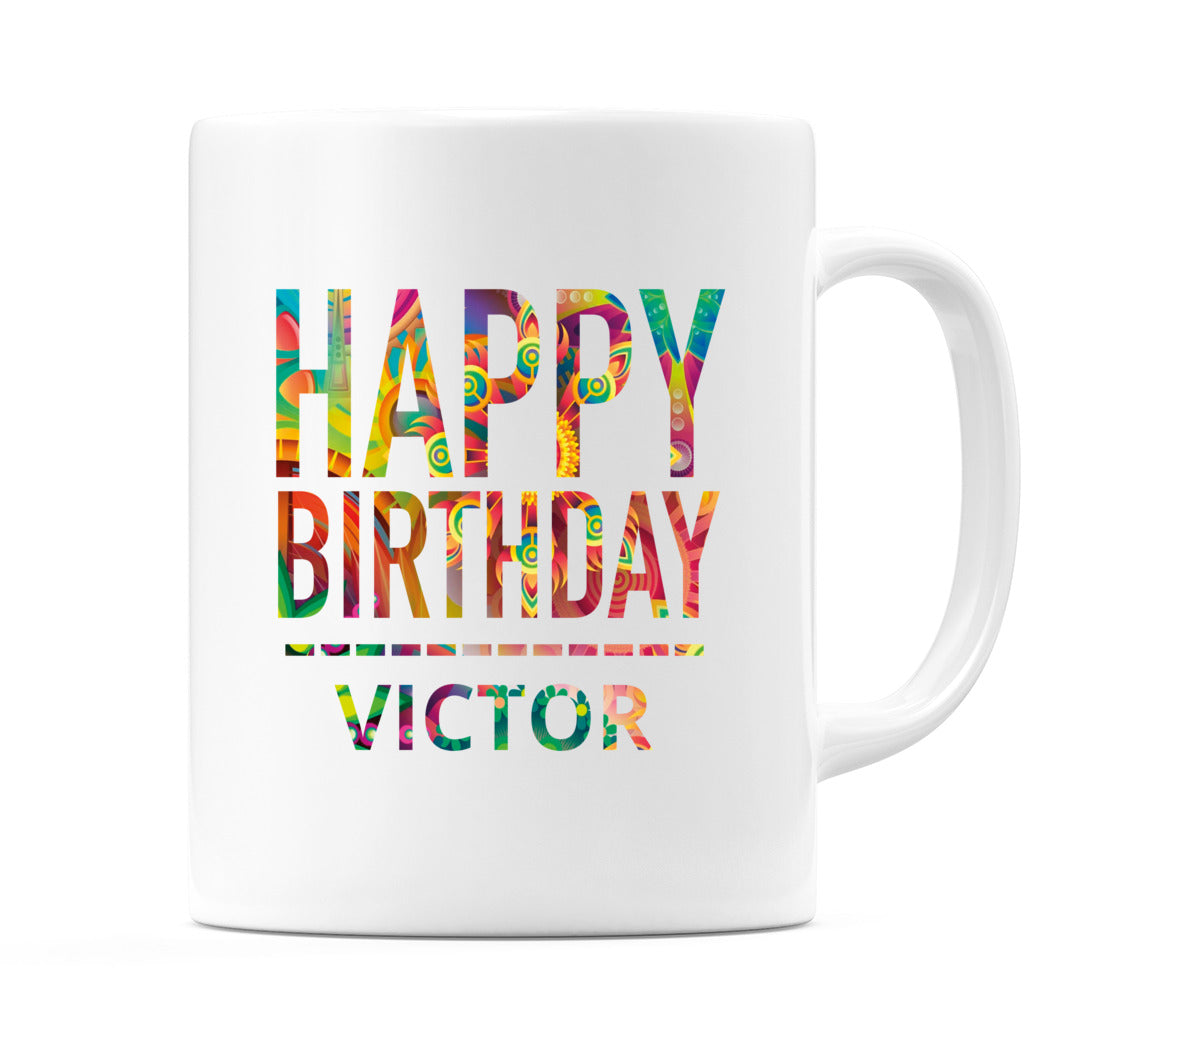 Happy Birthday Victor (Tie Dye Effect) Mug Cup by WeDoMugs